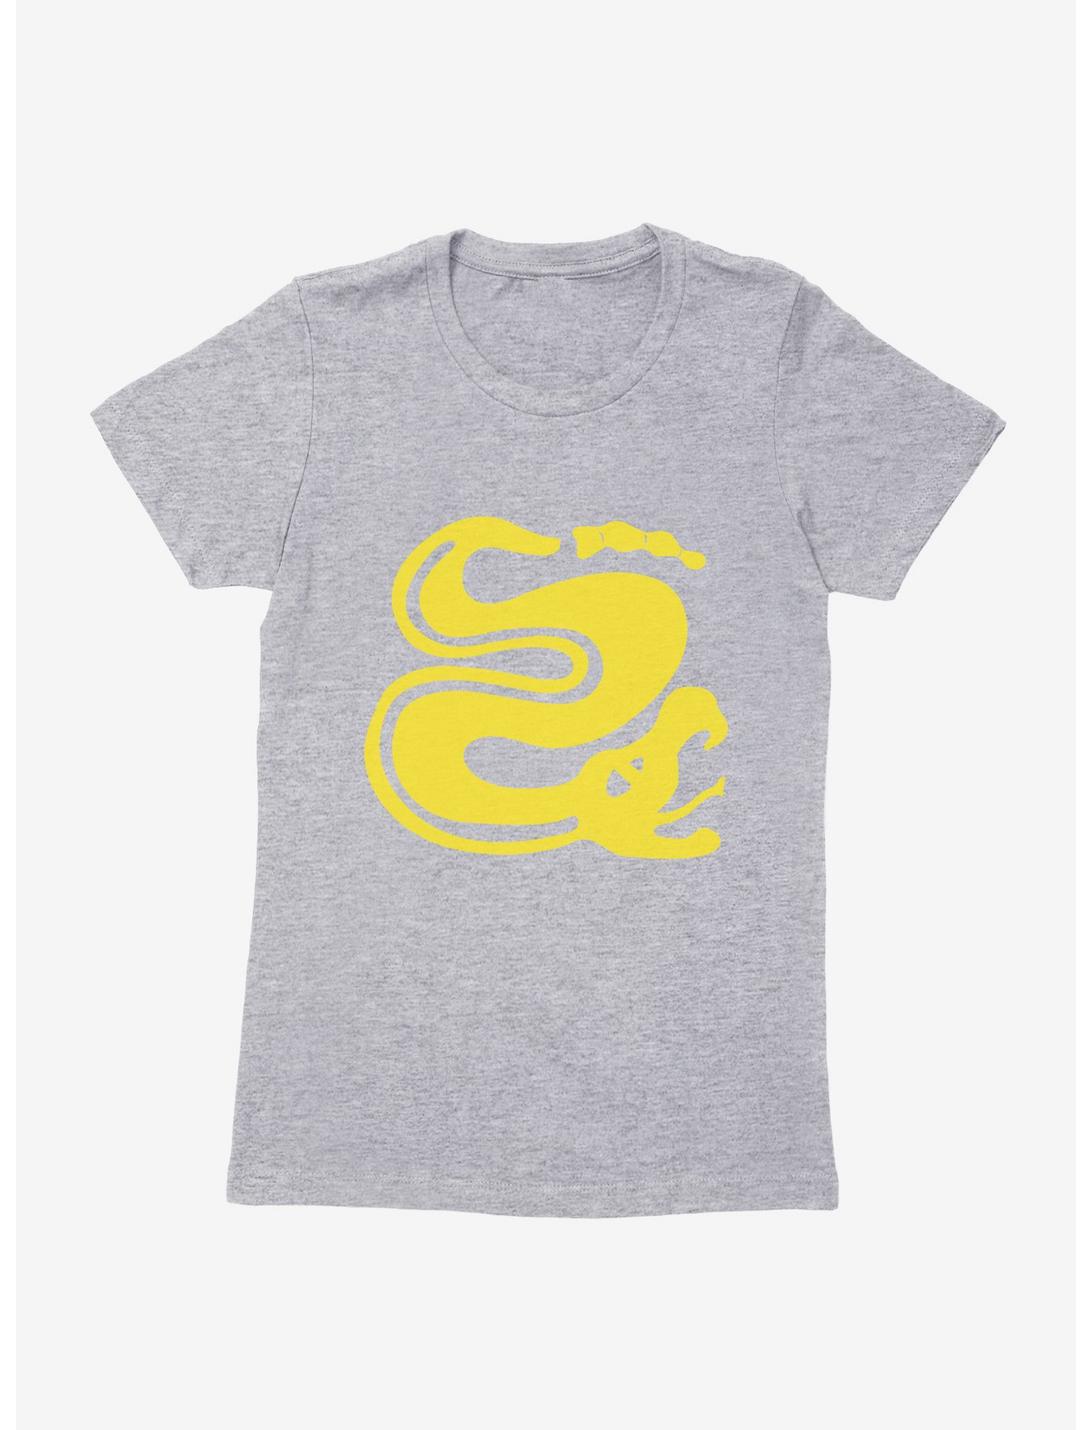 Legends Of The Hidden Temple Silver Snakess Womens T-Shirt, HEATHER, hi-res